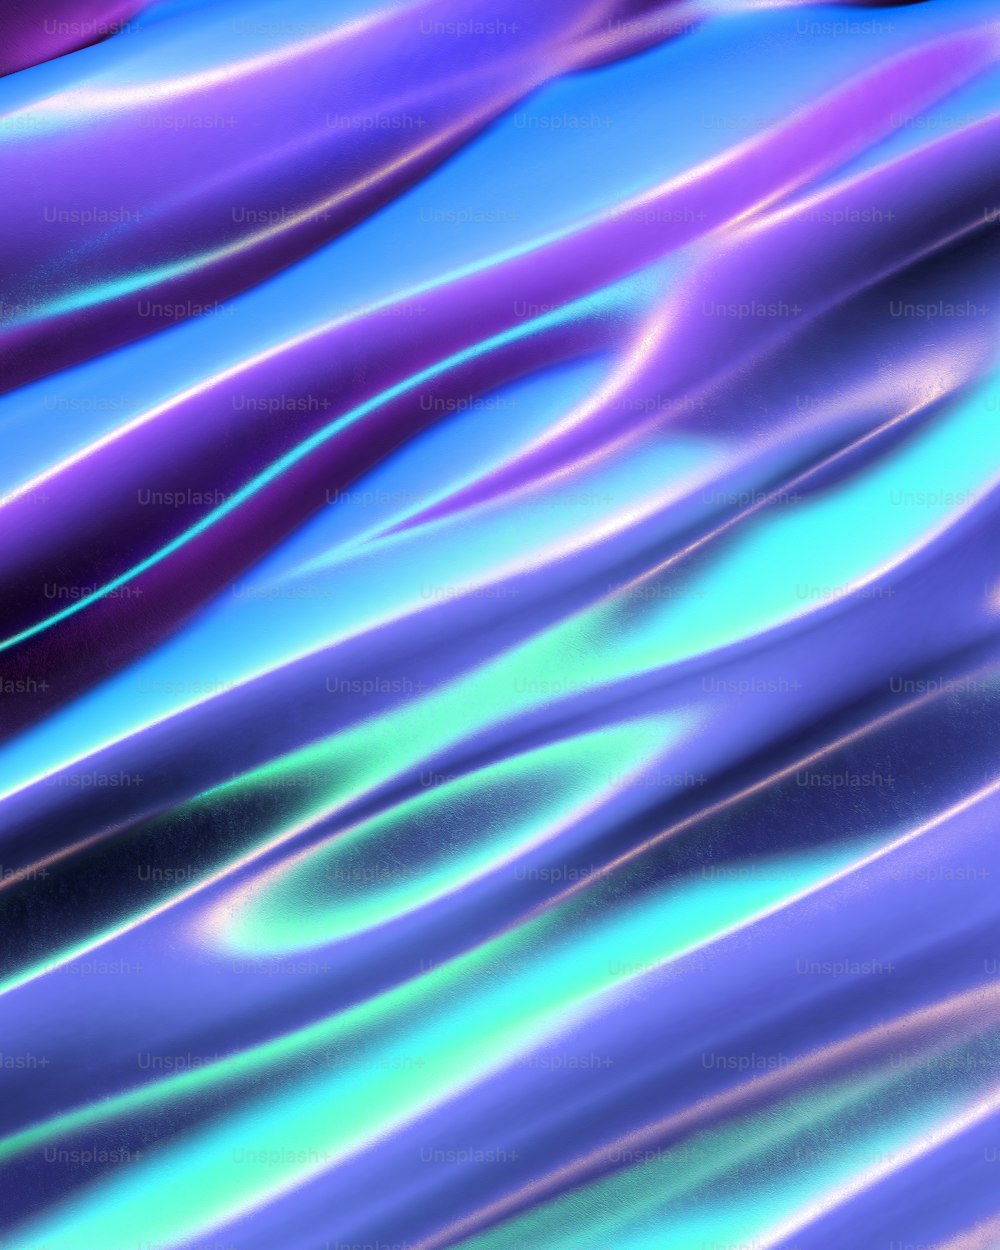 uno sfondo blu e viola con linee ondulate